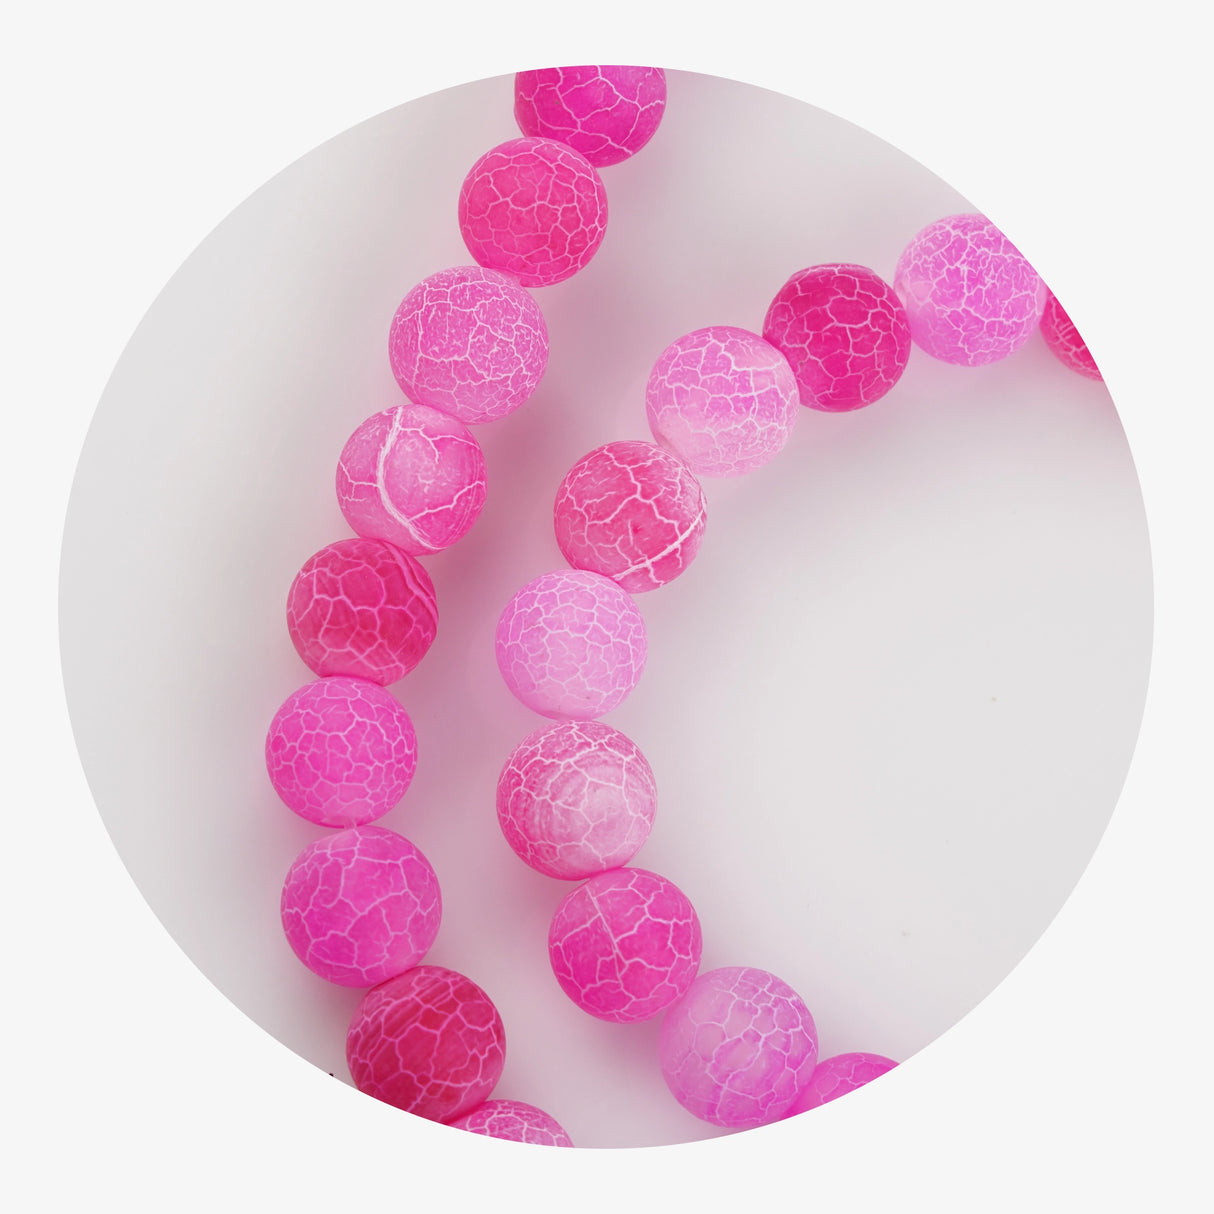 Stone String Beads - Pink 2 Tone